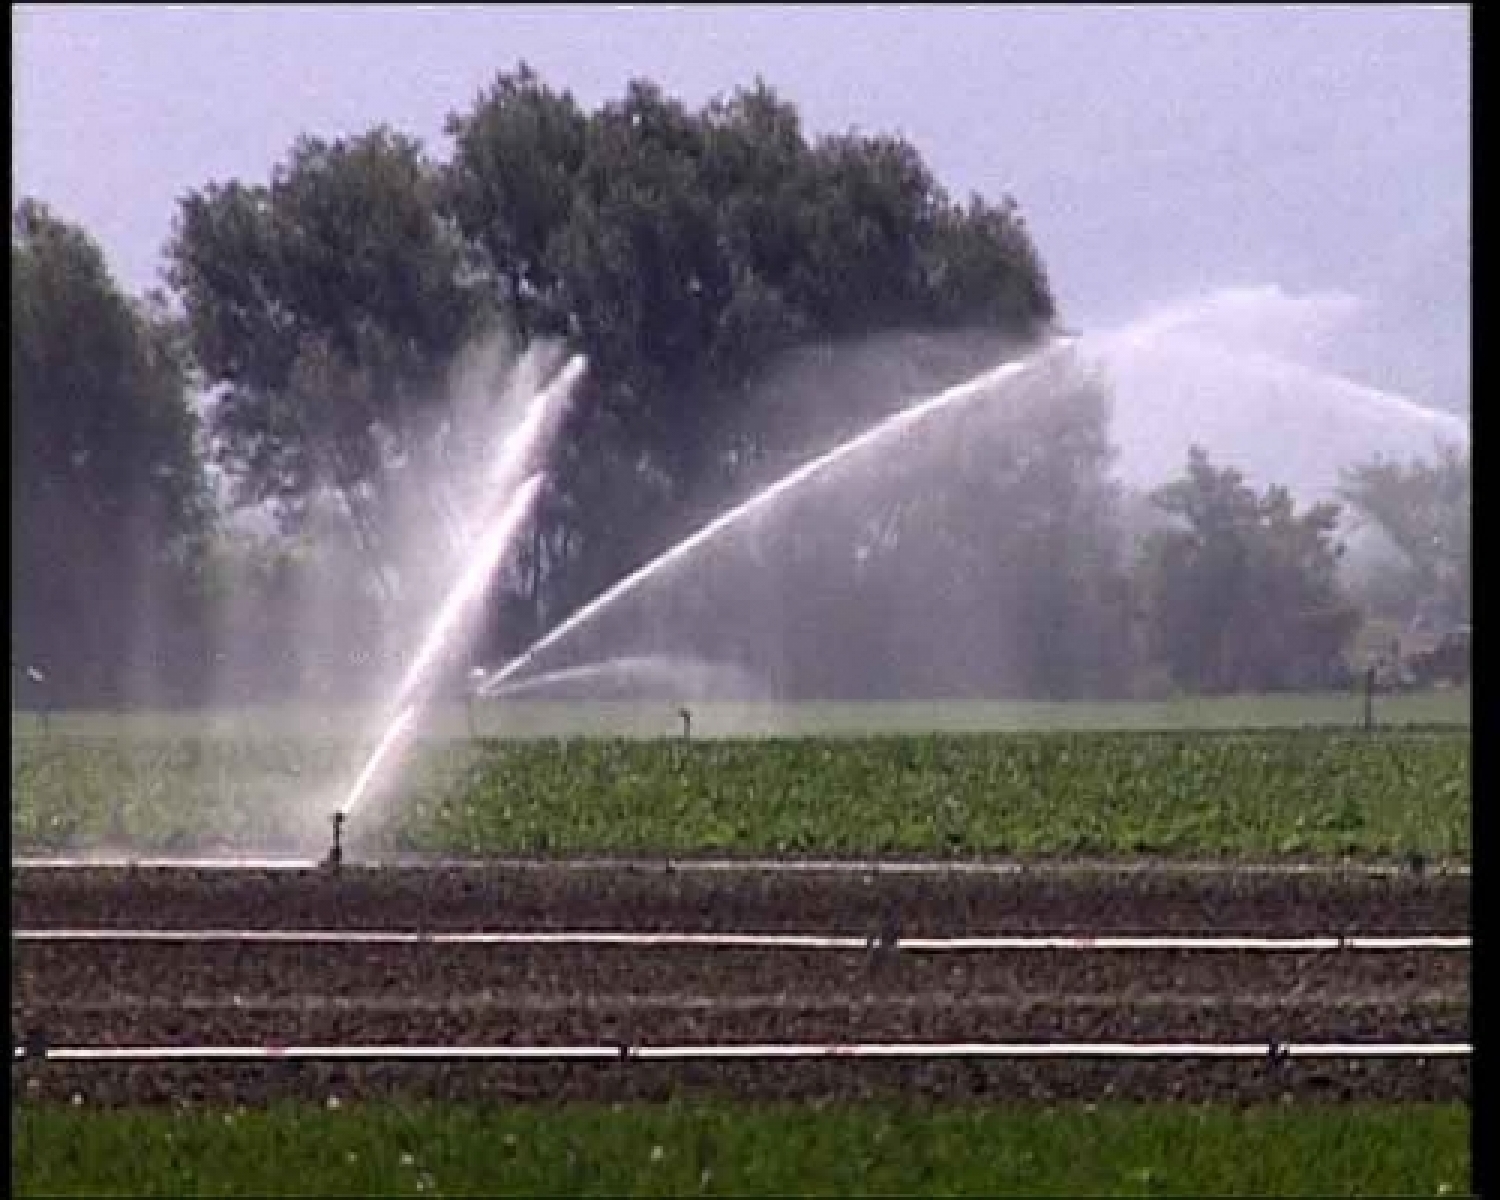 irrigazione-fucino.jpg